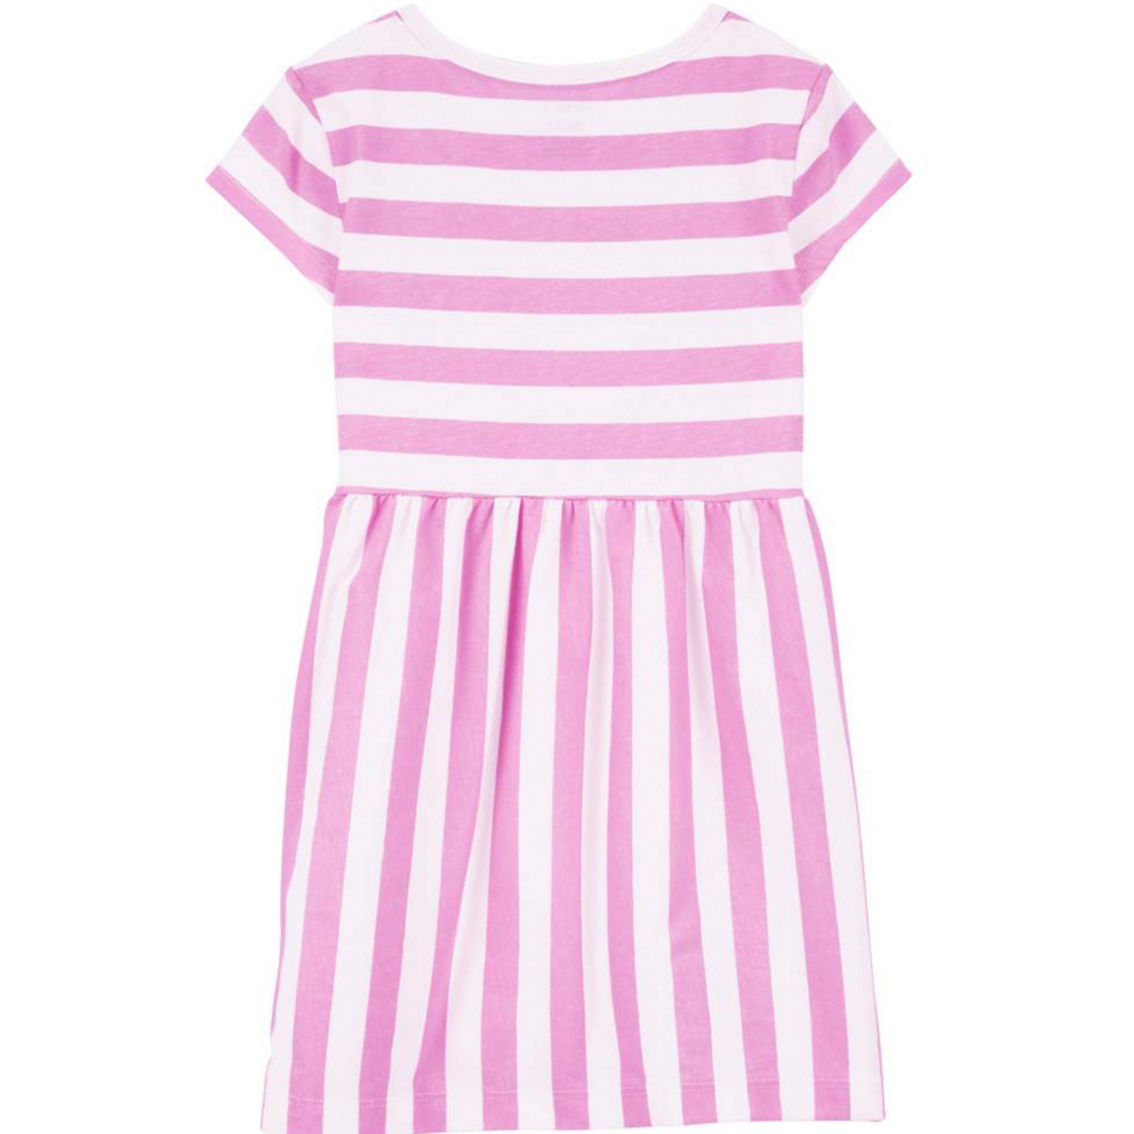 Carter's Toddler Girls Striped Cotton Dress - Image 2 of 2